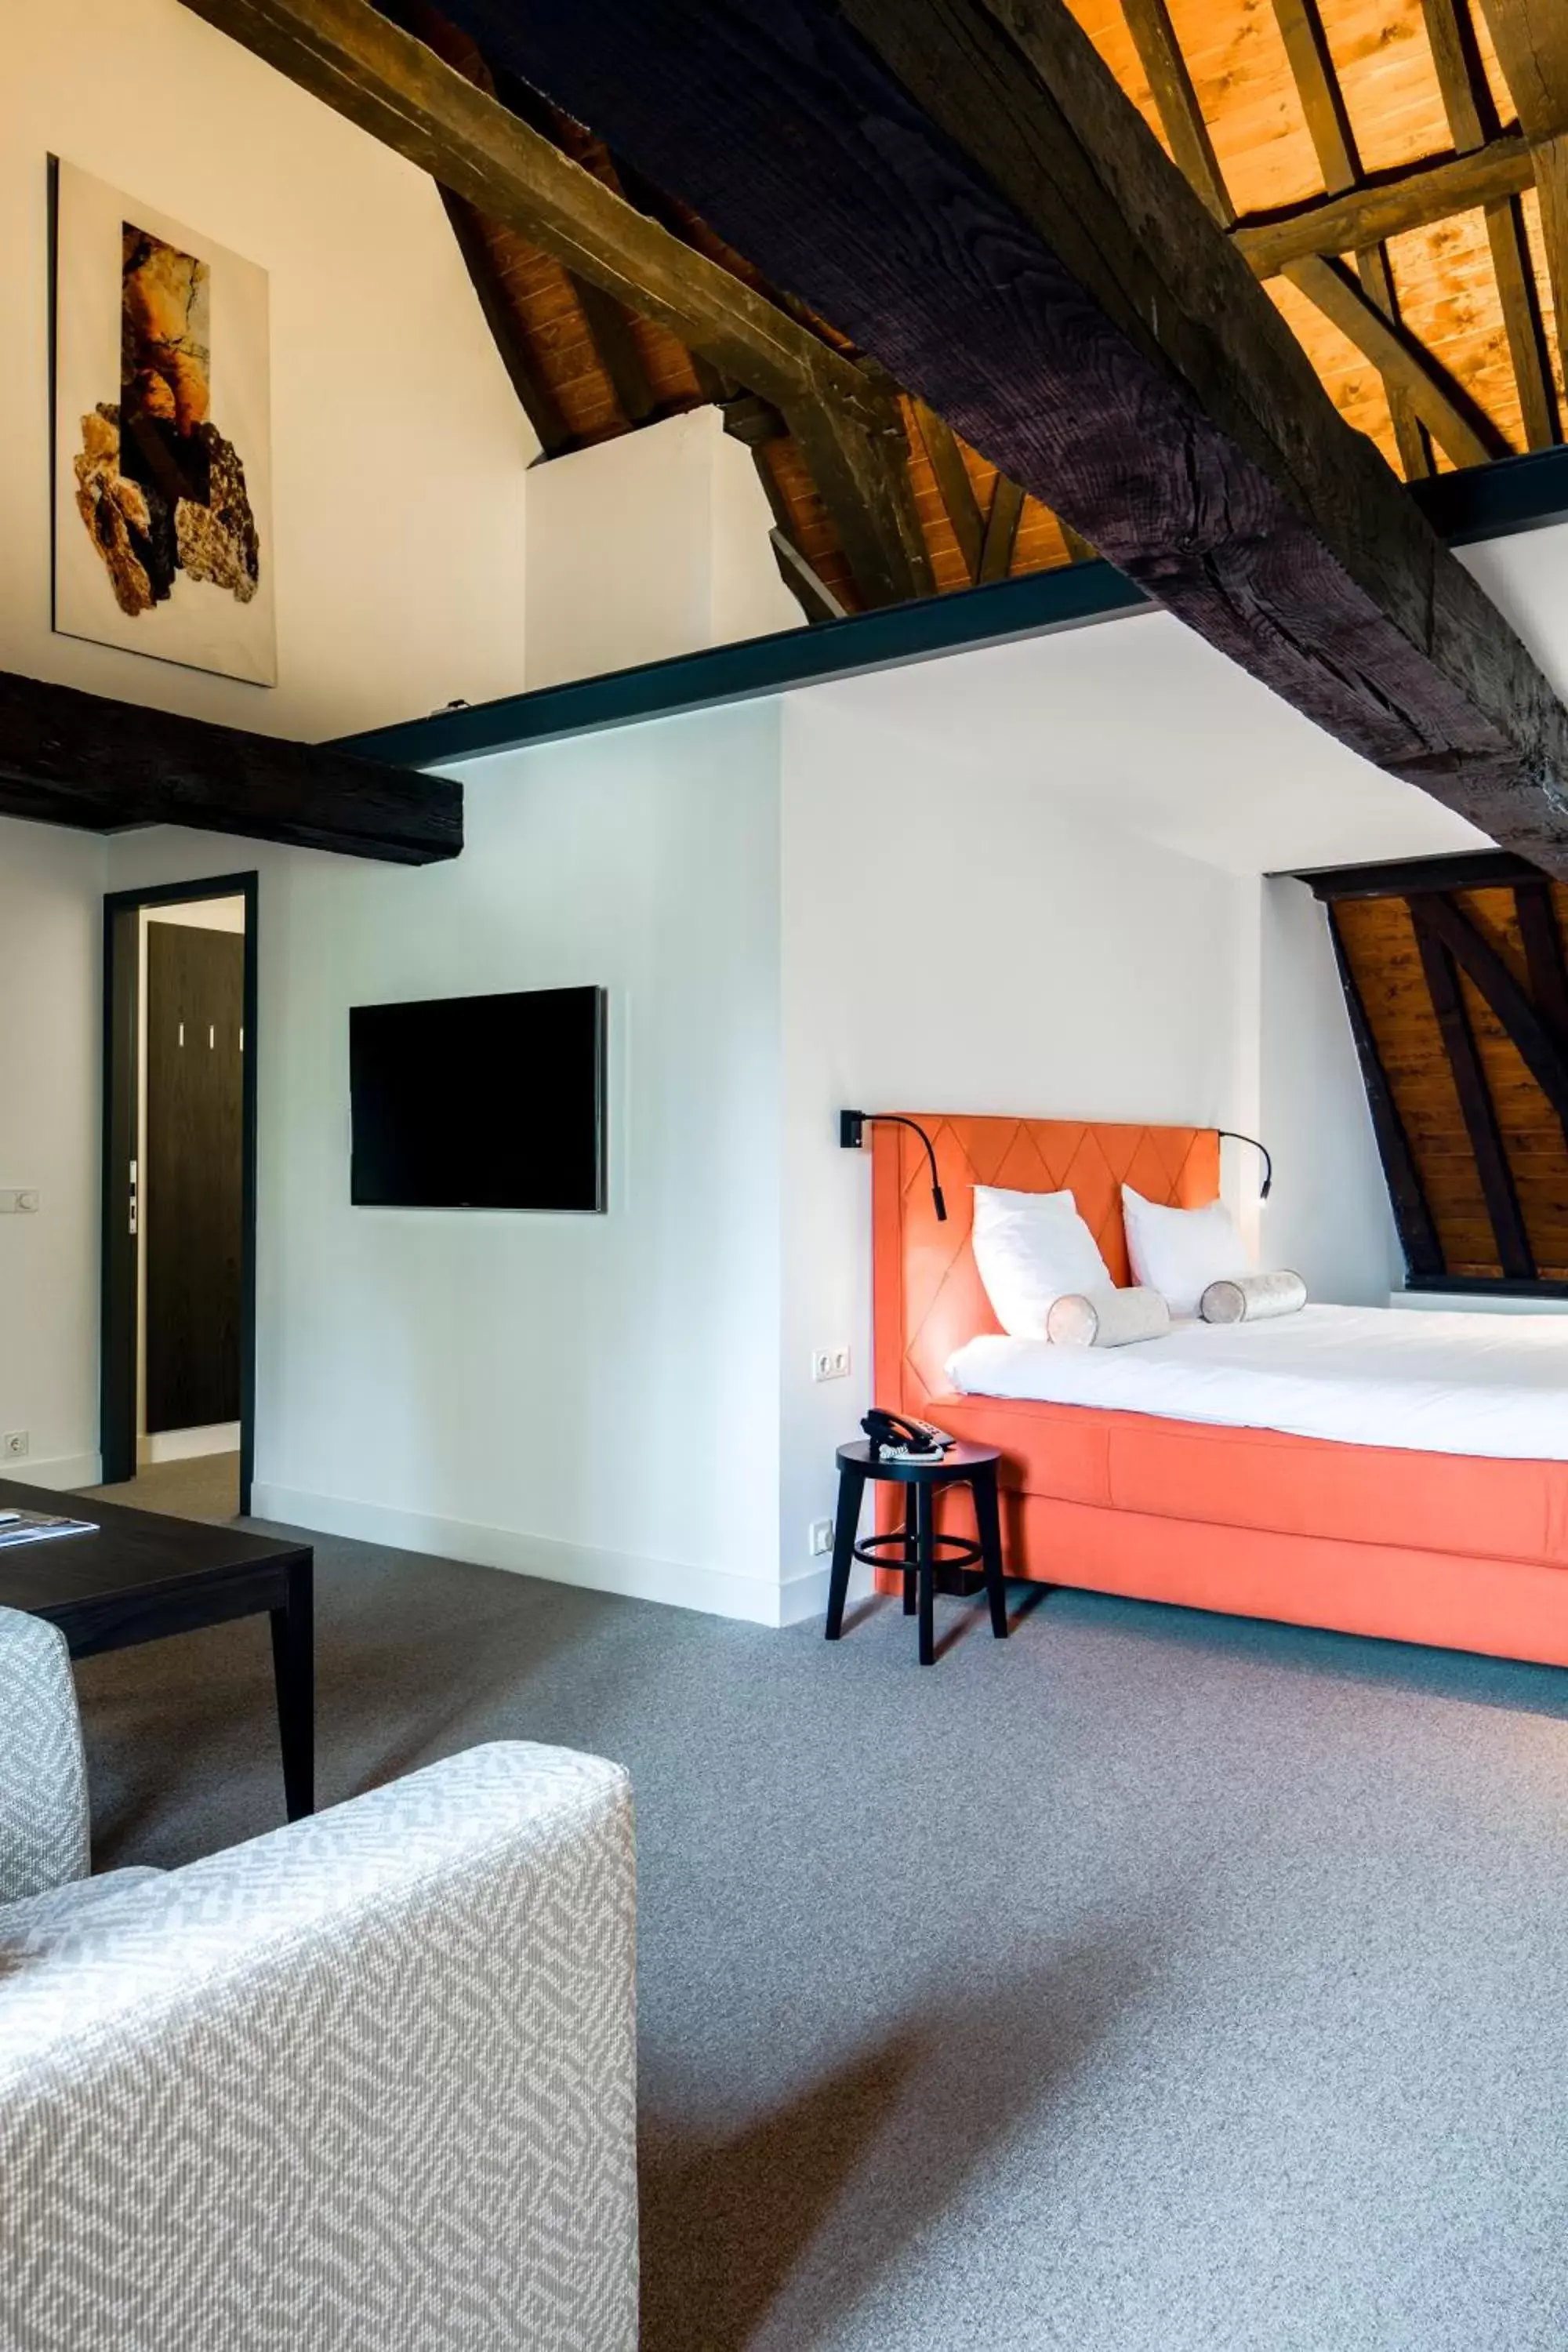 Bed in Hampshire Hotel - 's Gravenhof Zutphen